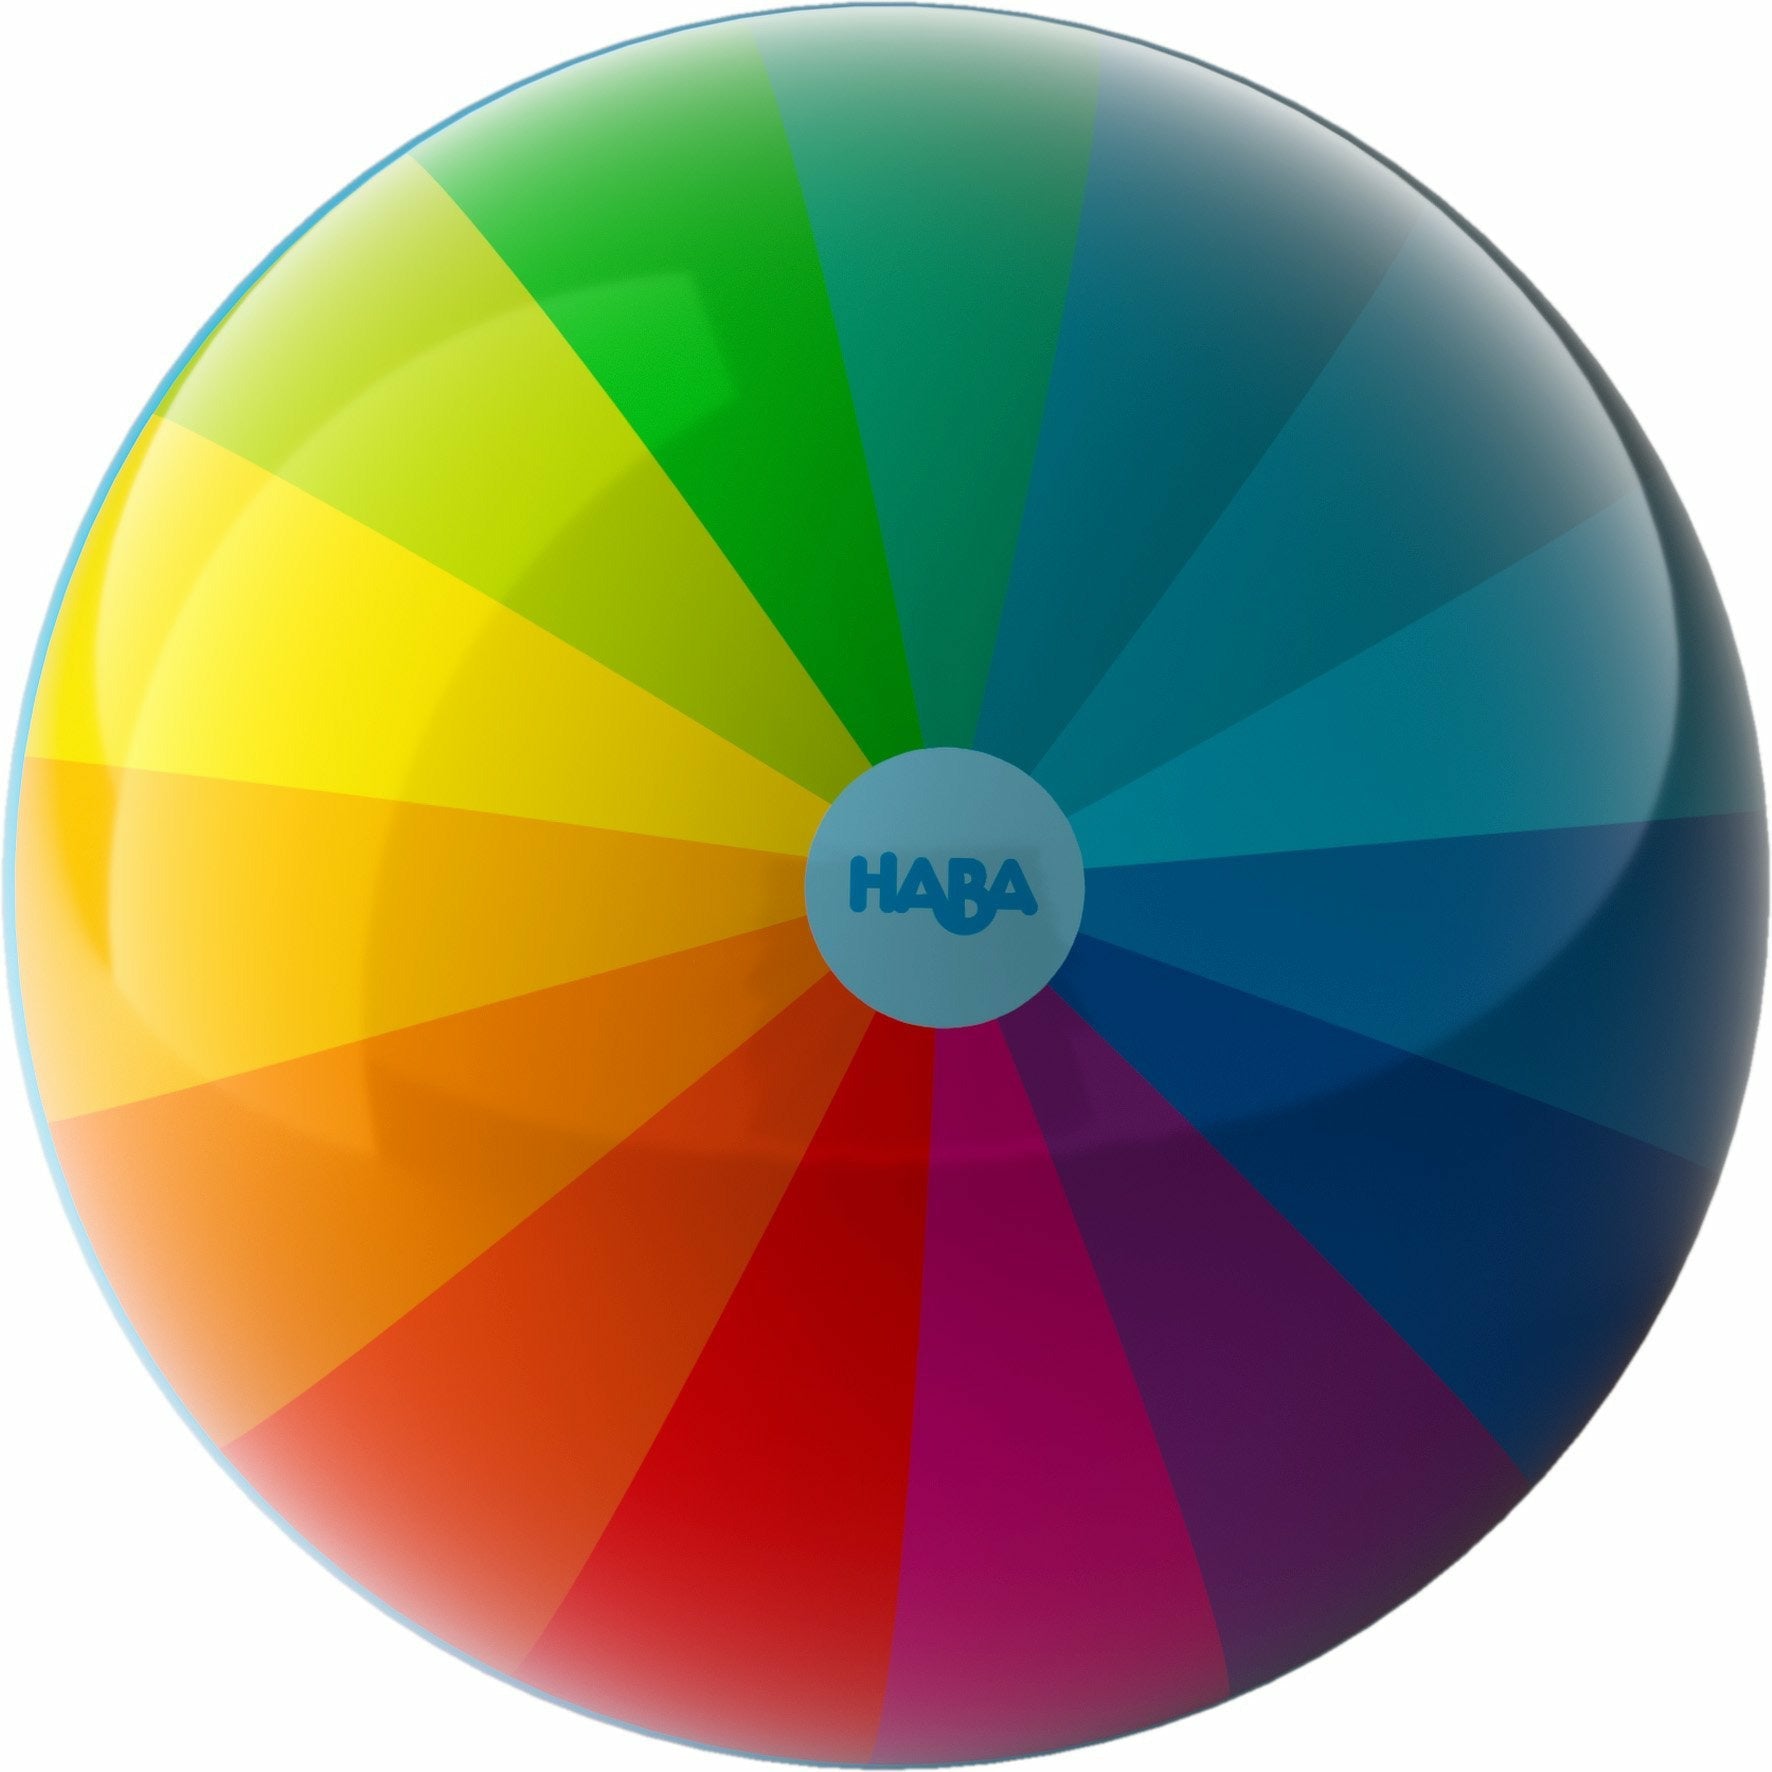 HABA | Ball Regenbogenfarben